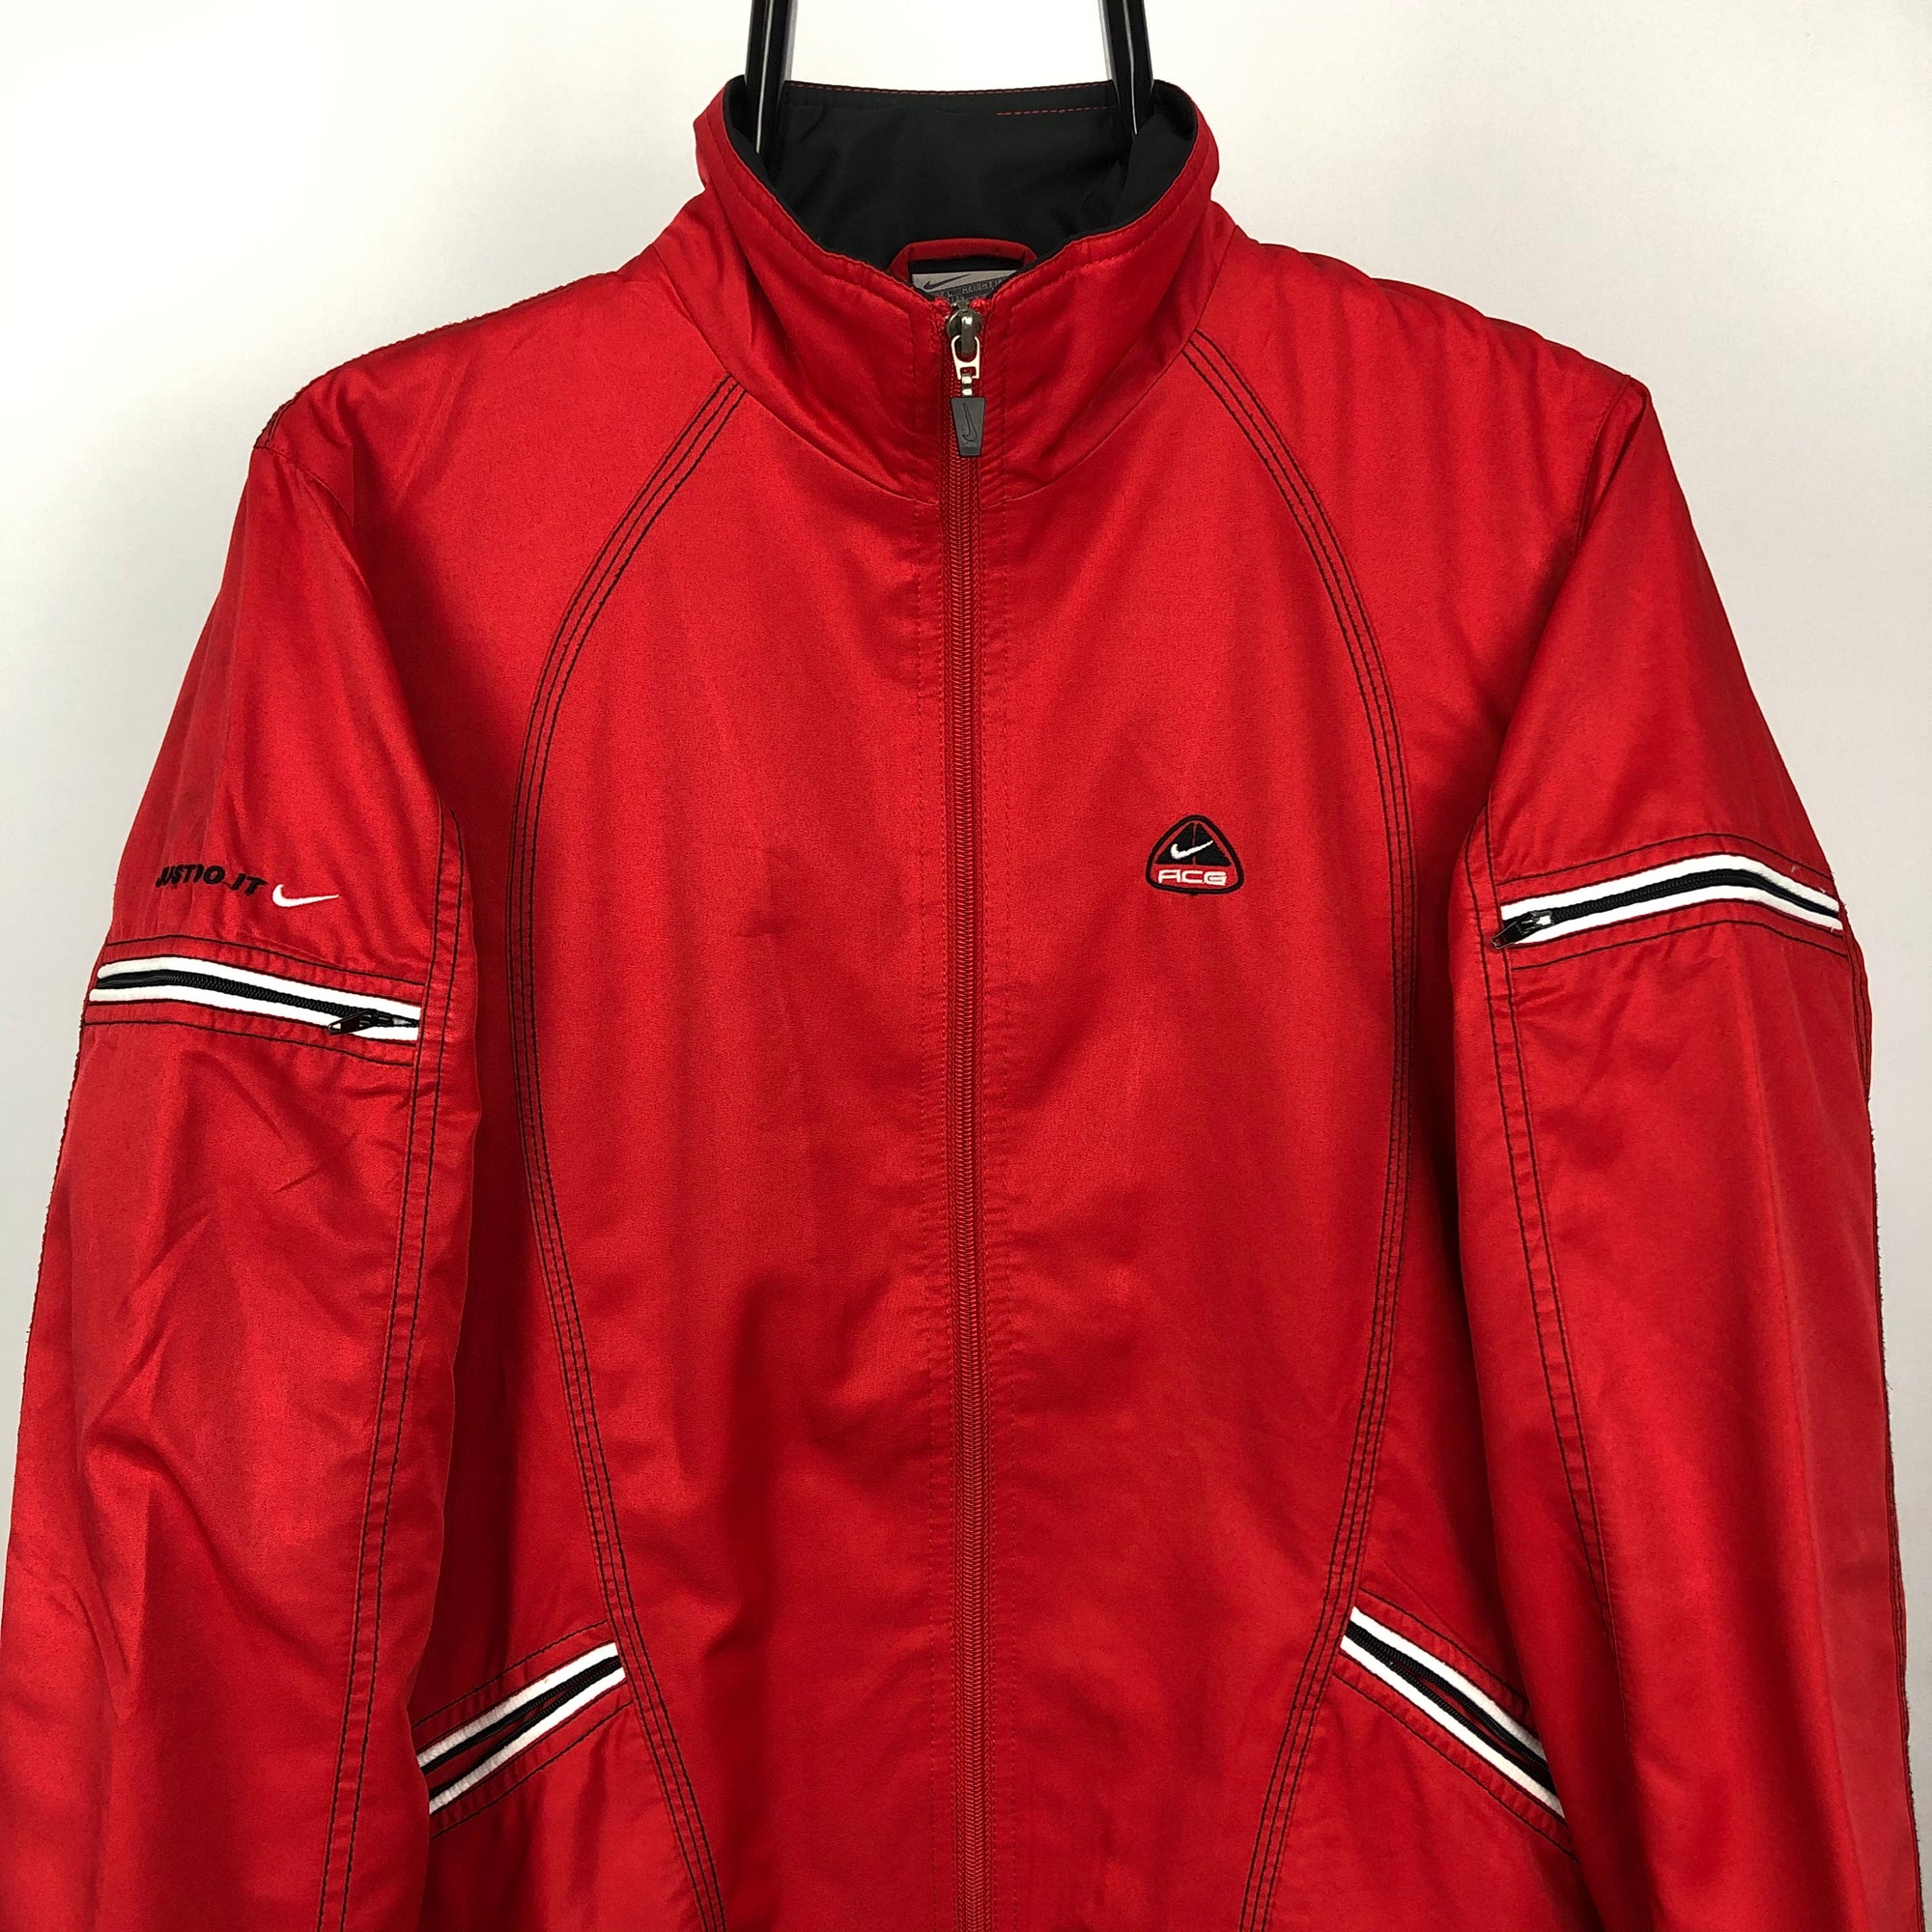 Vintage Nike ACG Track Jacket in Red - Men's Small/Women's Medium